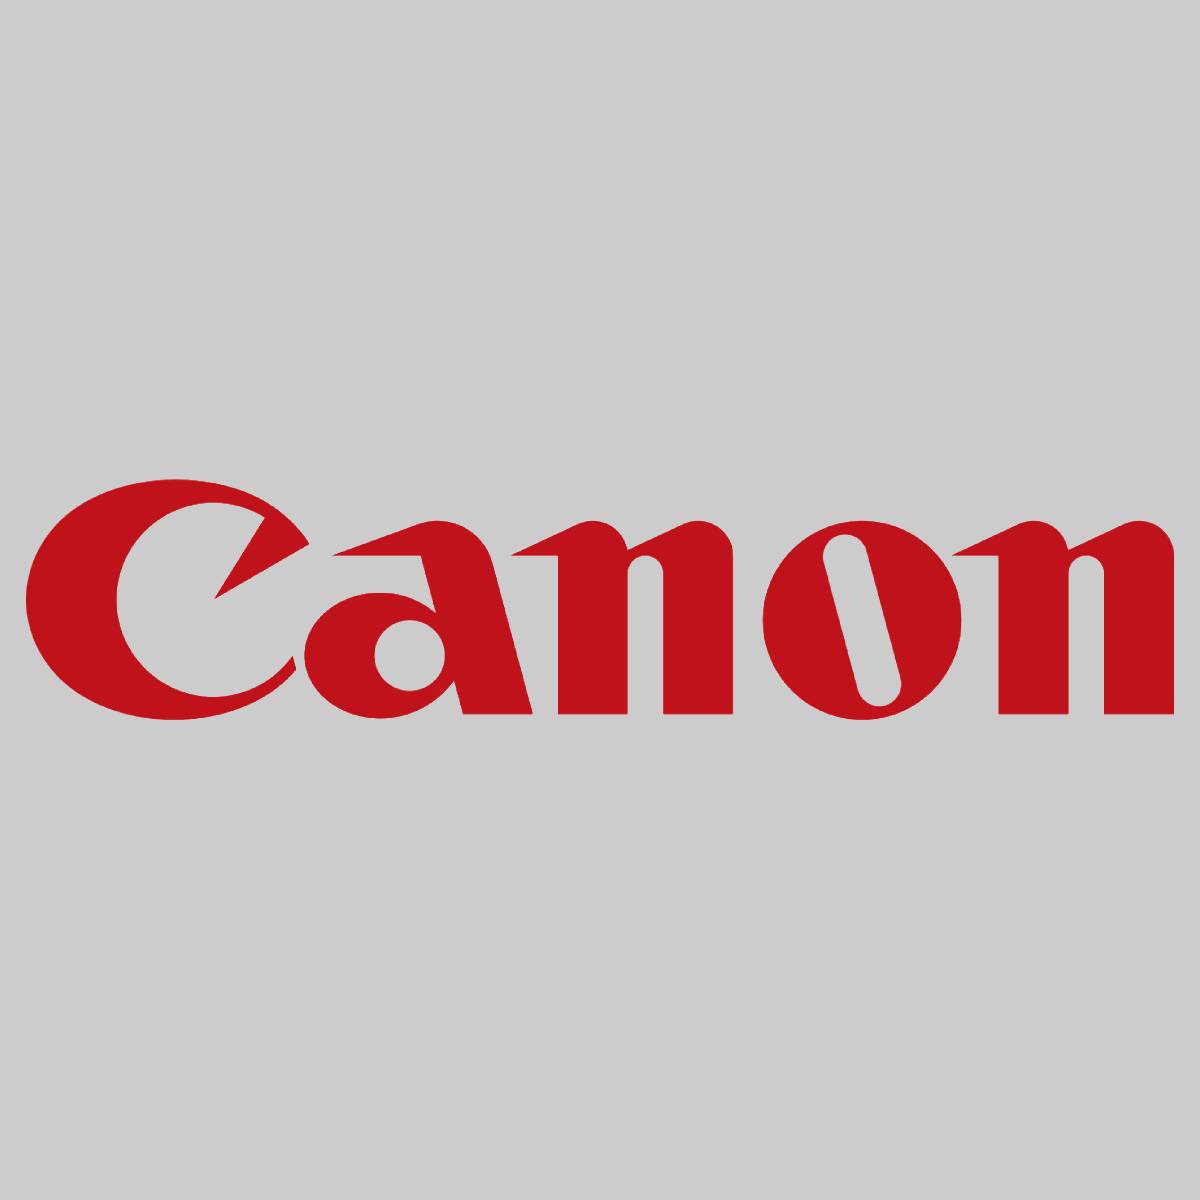 "Originele Canon C-EXV 49 Toner Zwart 8524B002 IR Advance C3320 / C3325 / C3330